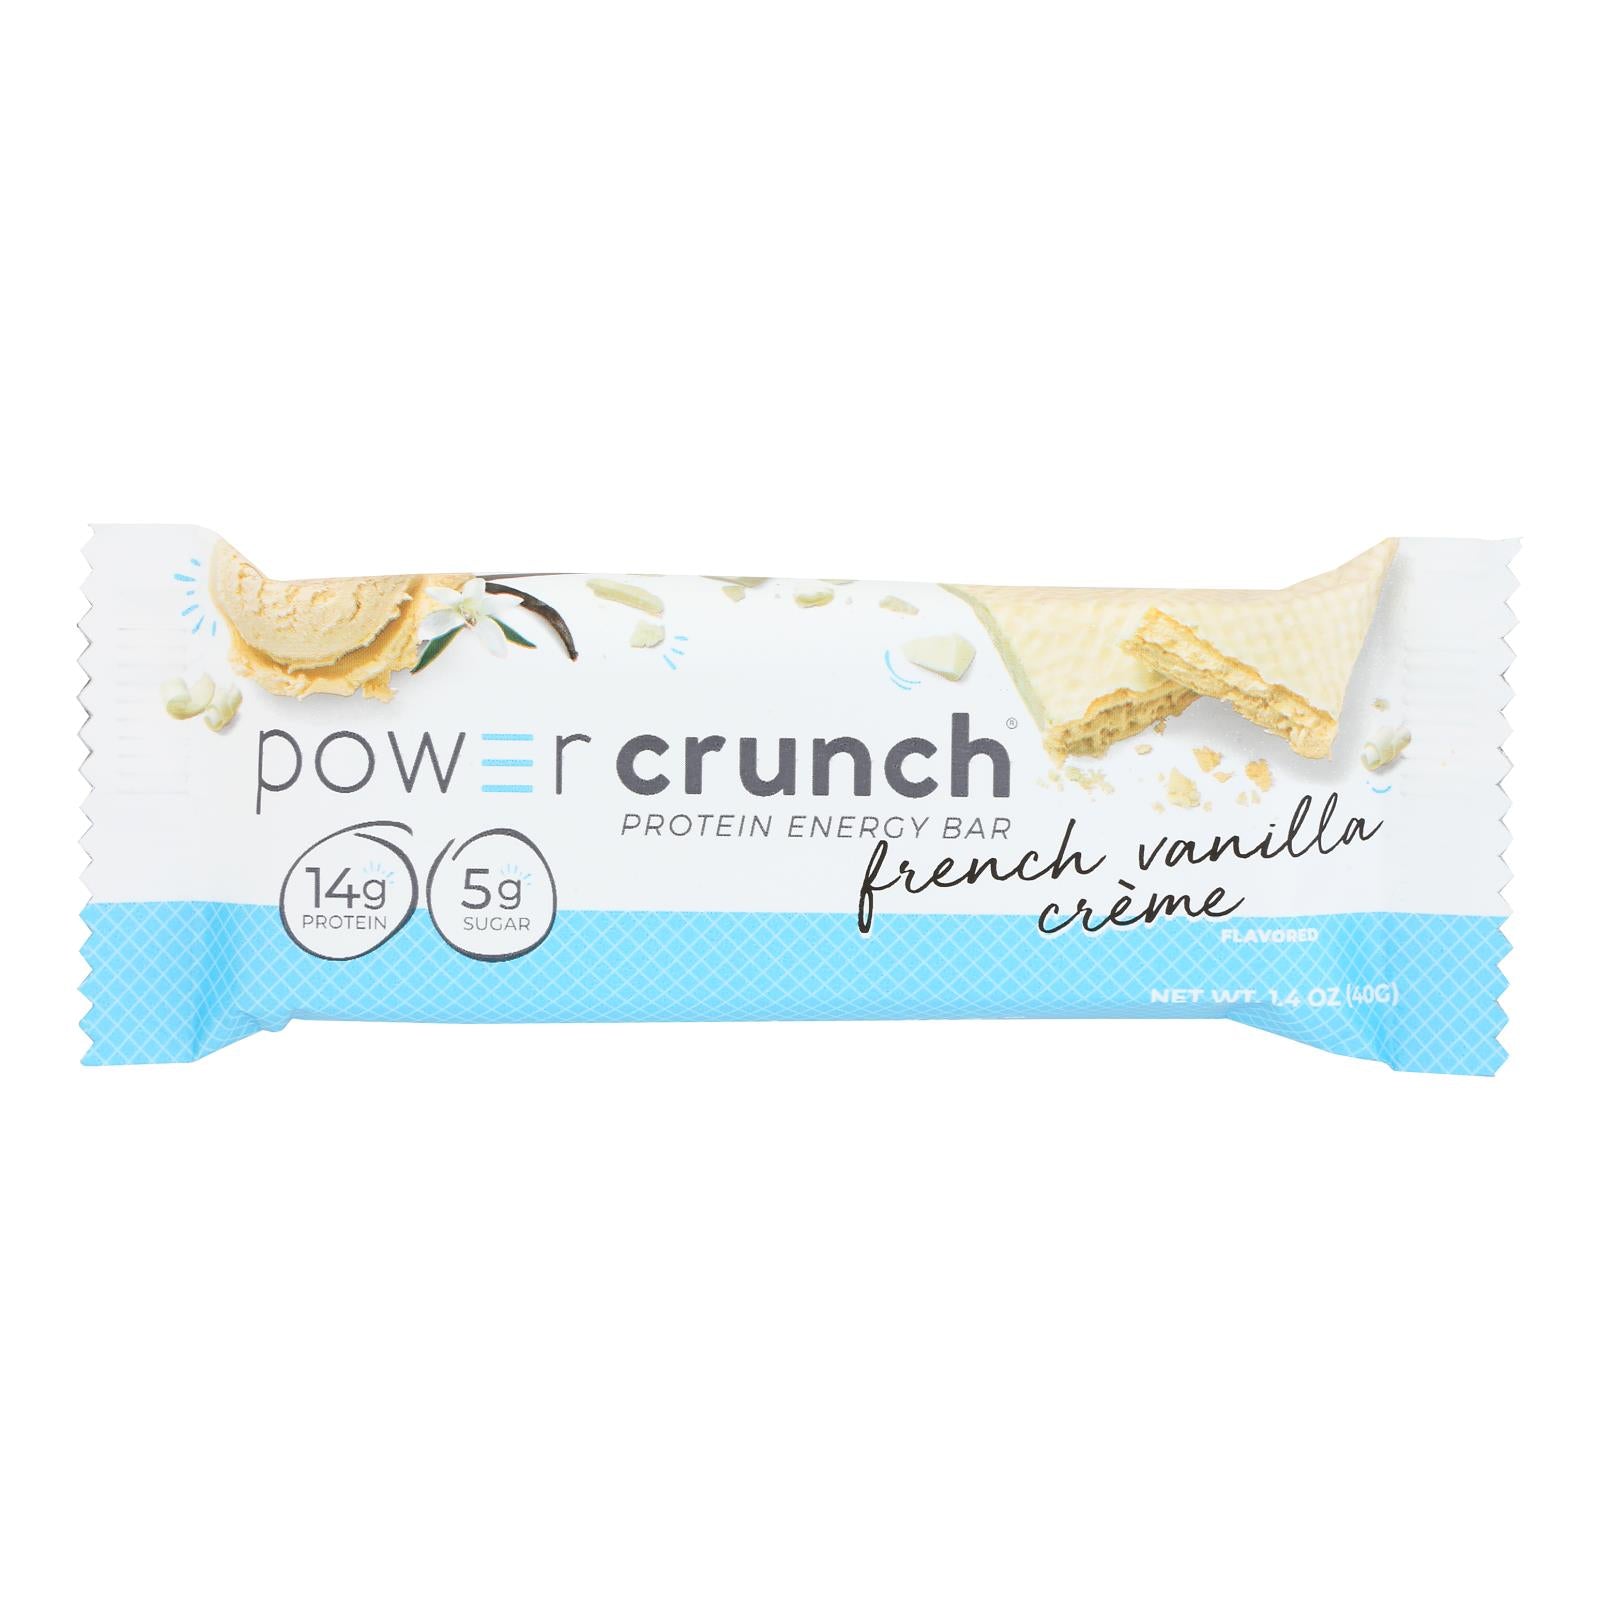 Power Crunch Bar - French Vanilla Cream - Case Of 12 - 1.4 Oz